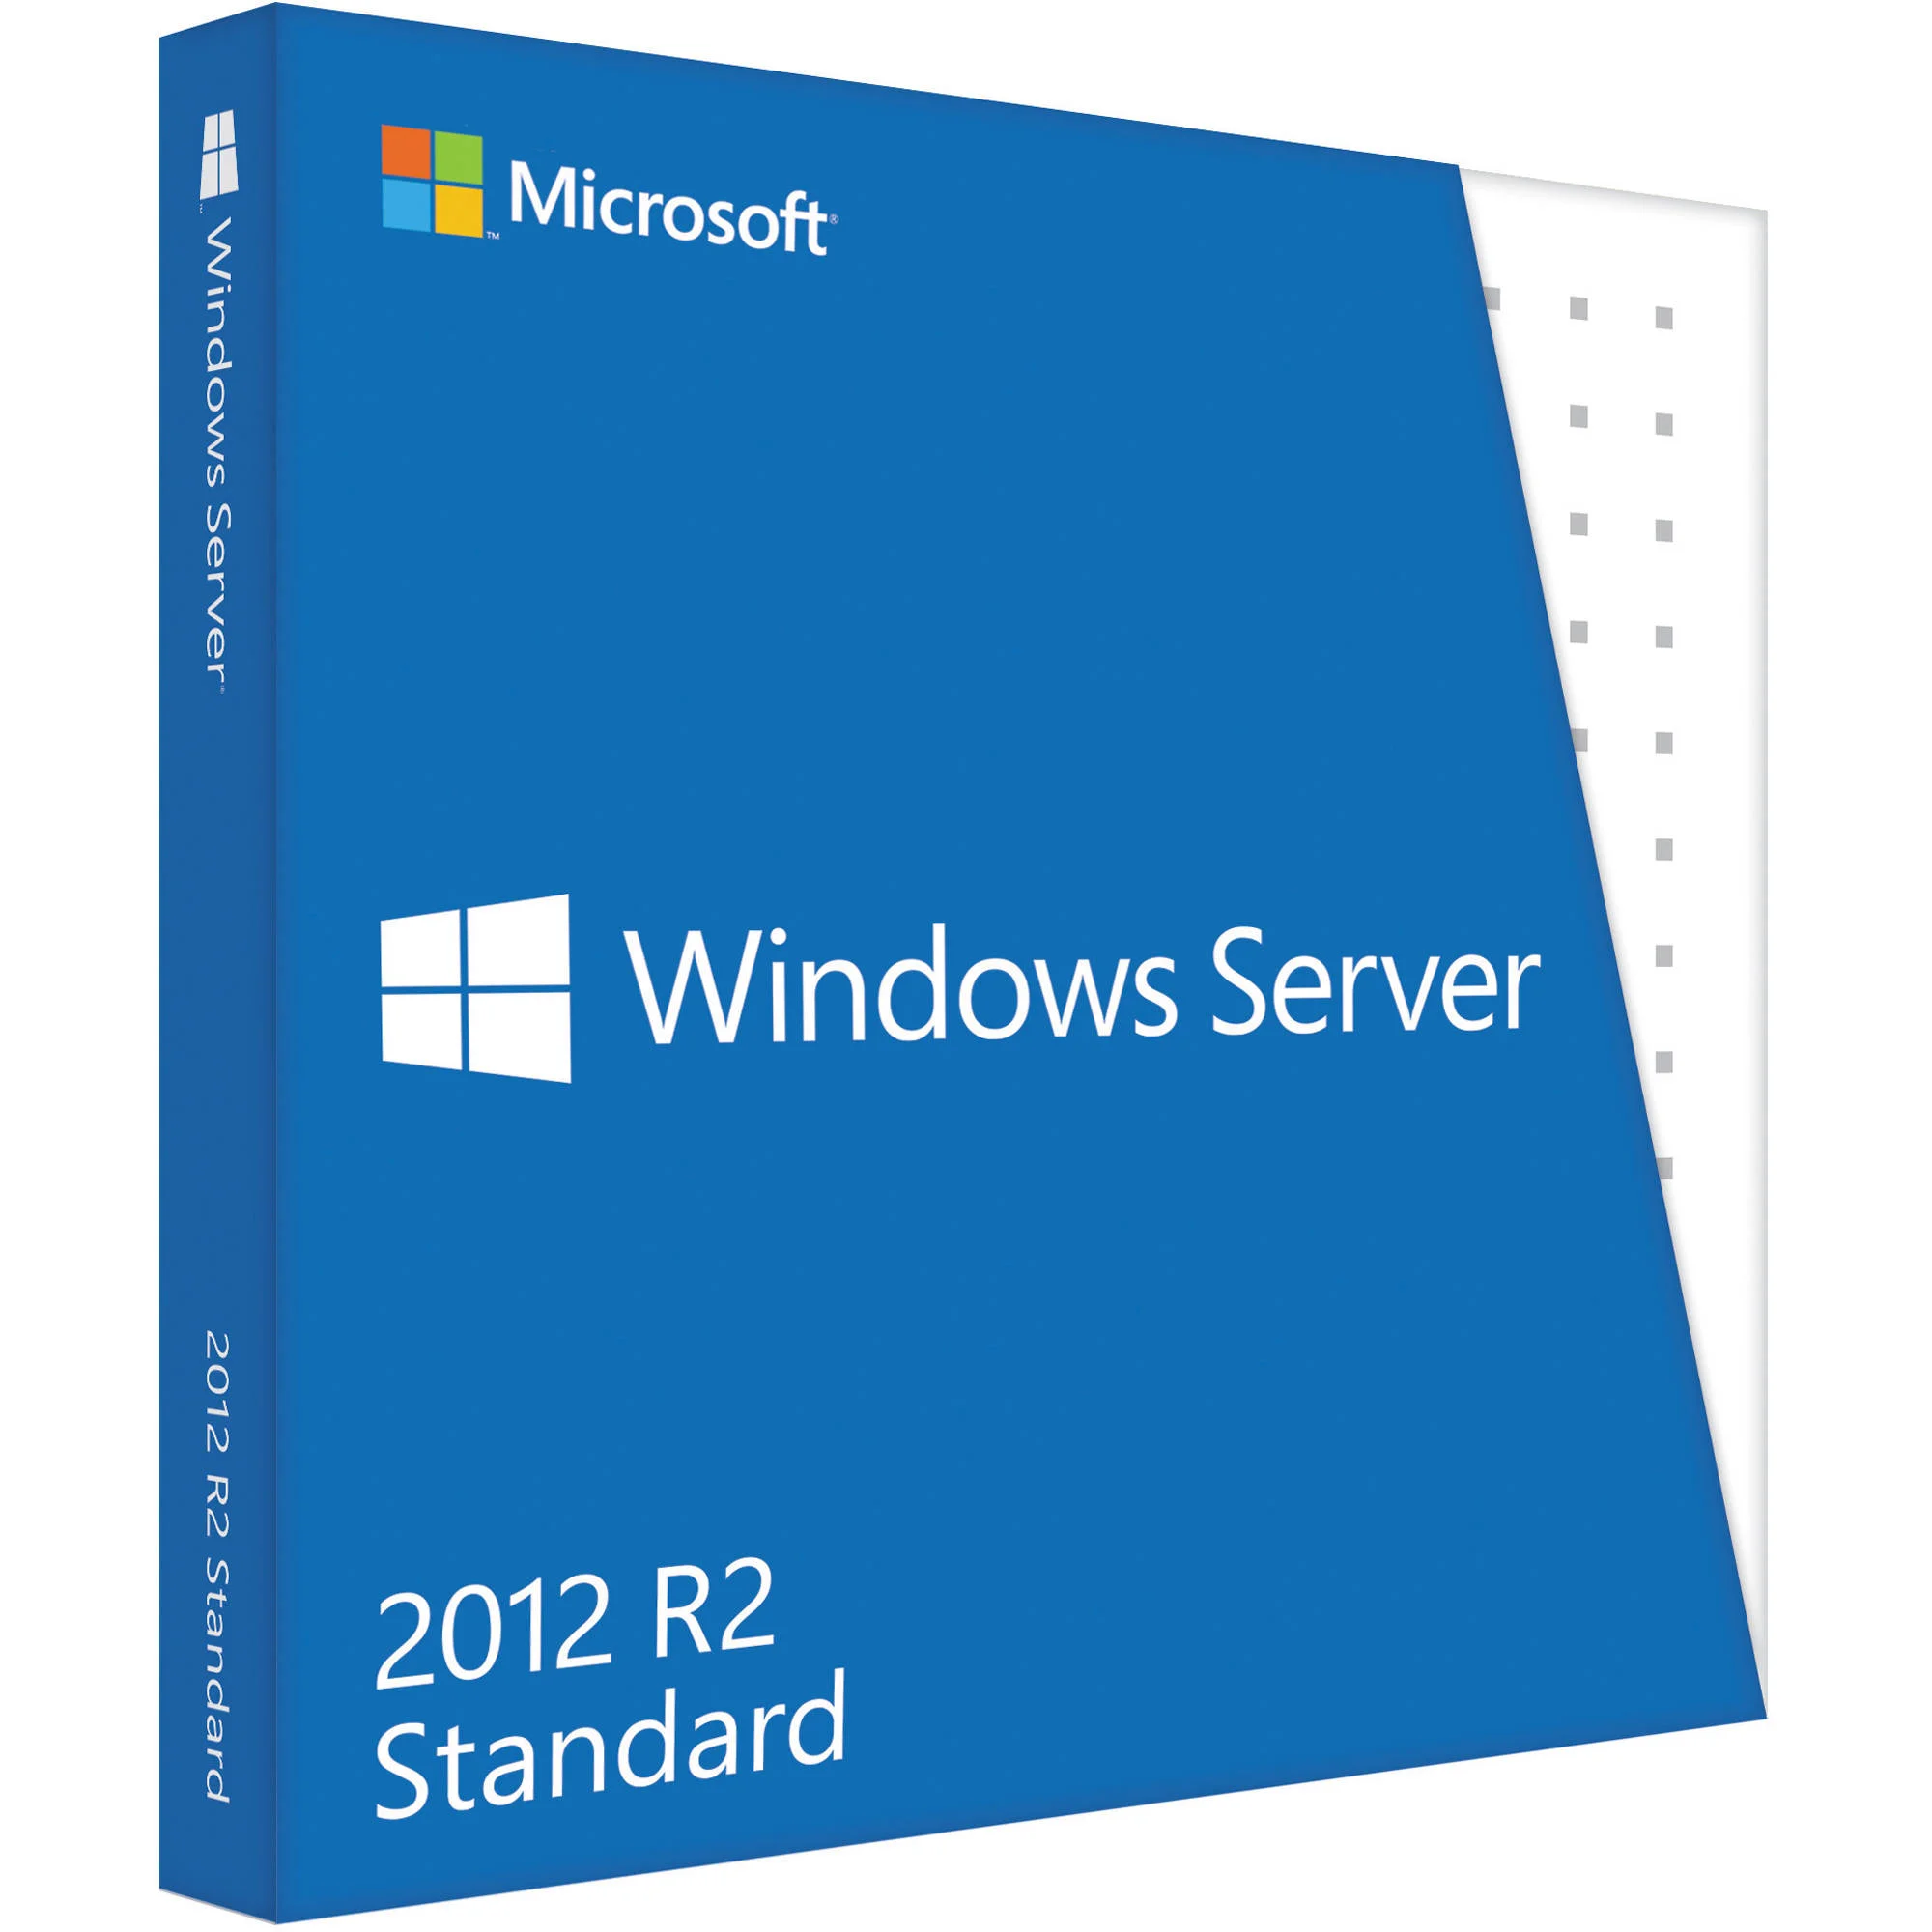 Windows Server R2 Download Free ISO File